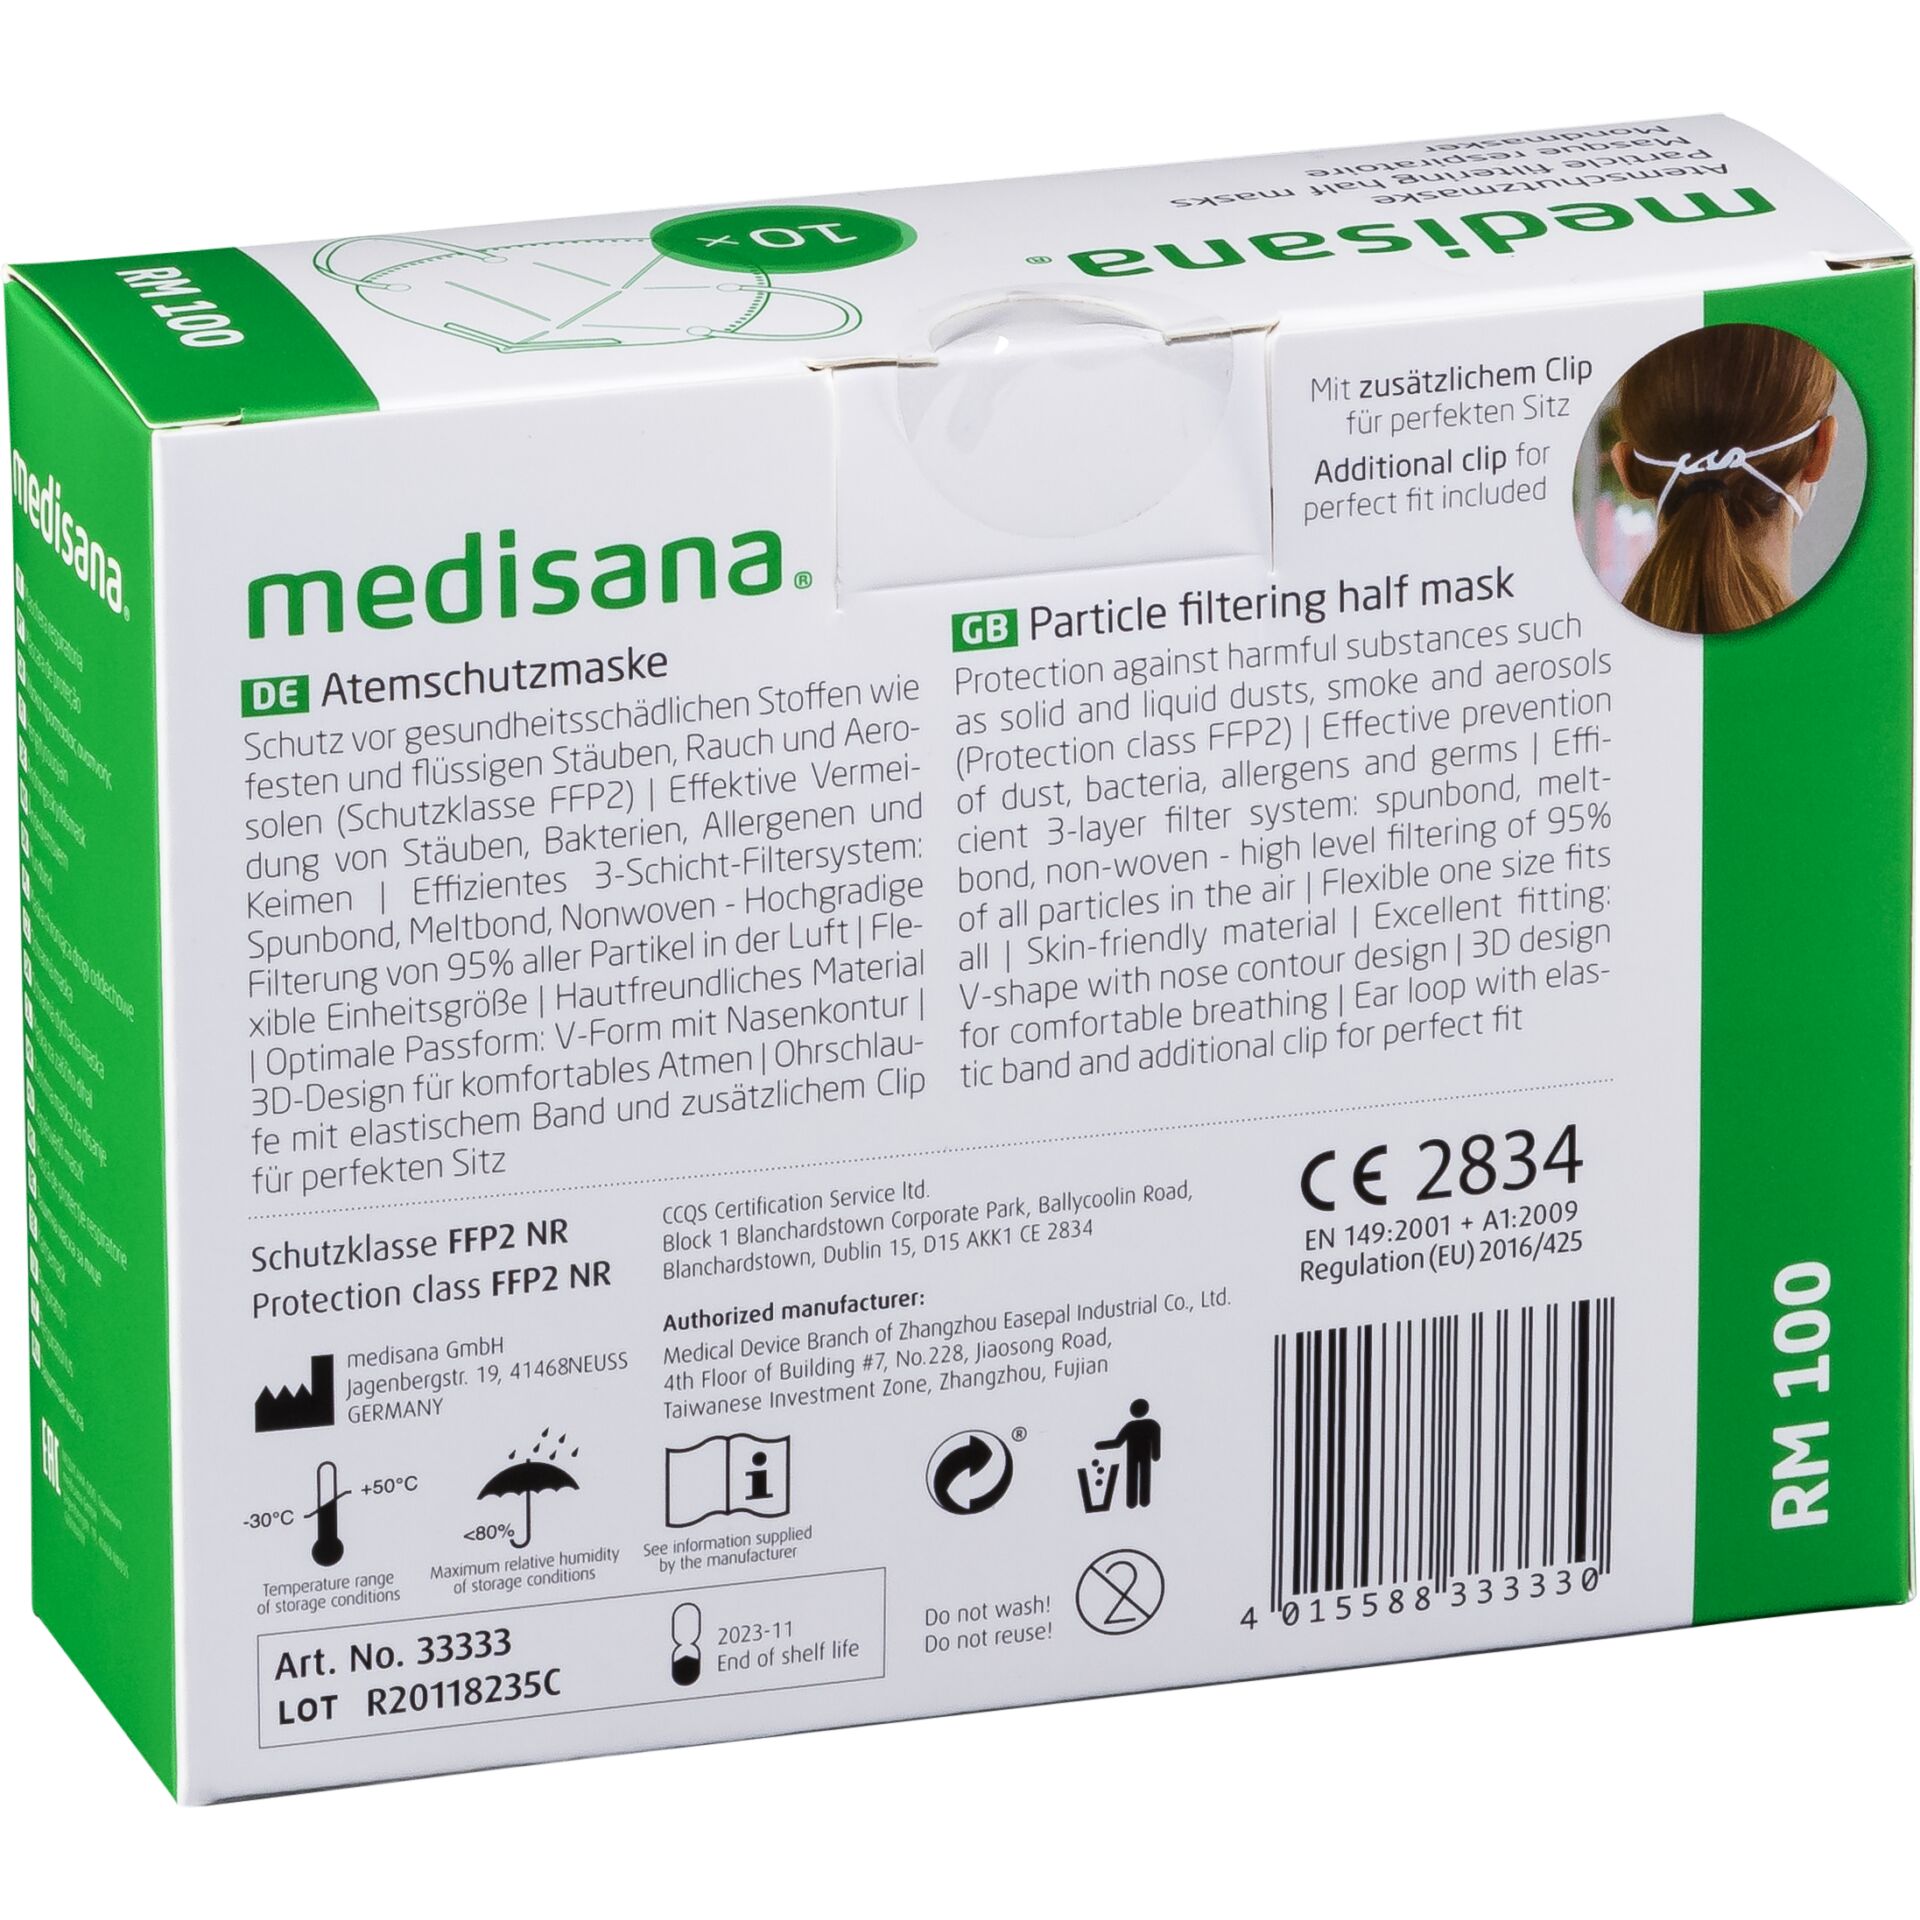 Medisana -RM 100 10 -Medisana Hardware/Electronic X Atemschutzmaske FFP2